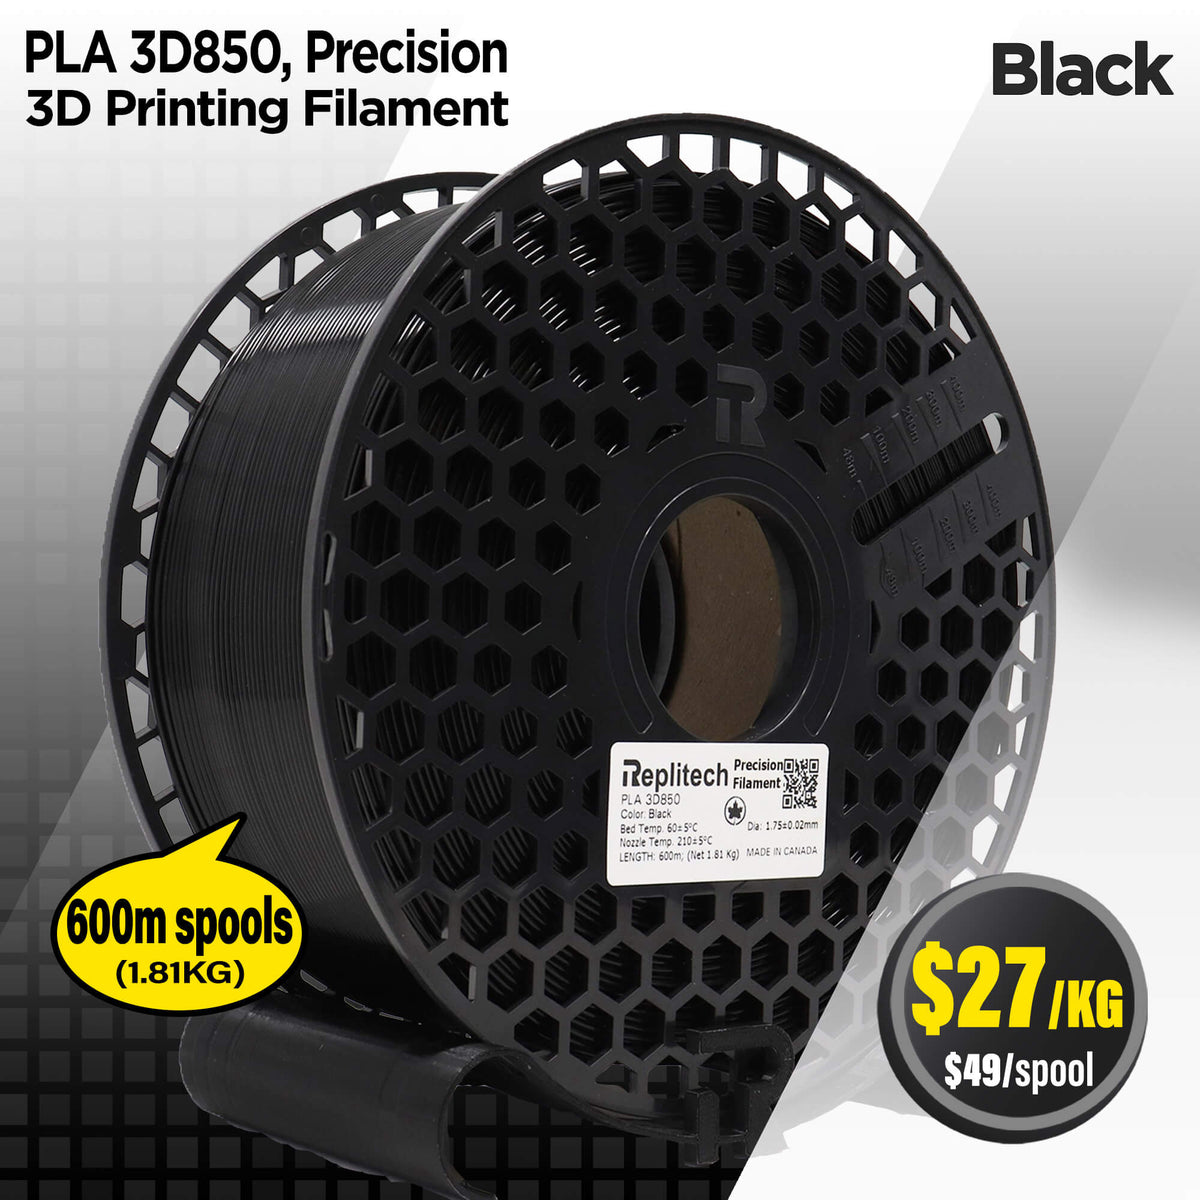 PLA 3D850 Precision Black